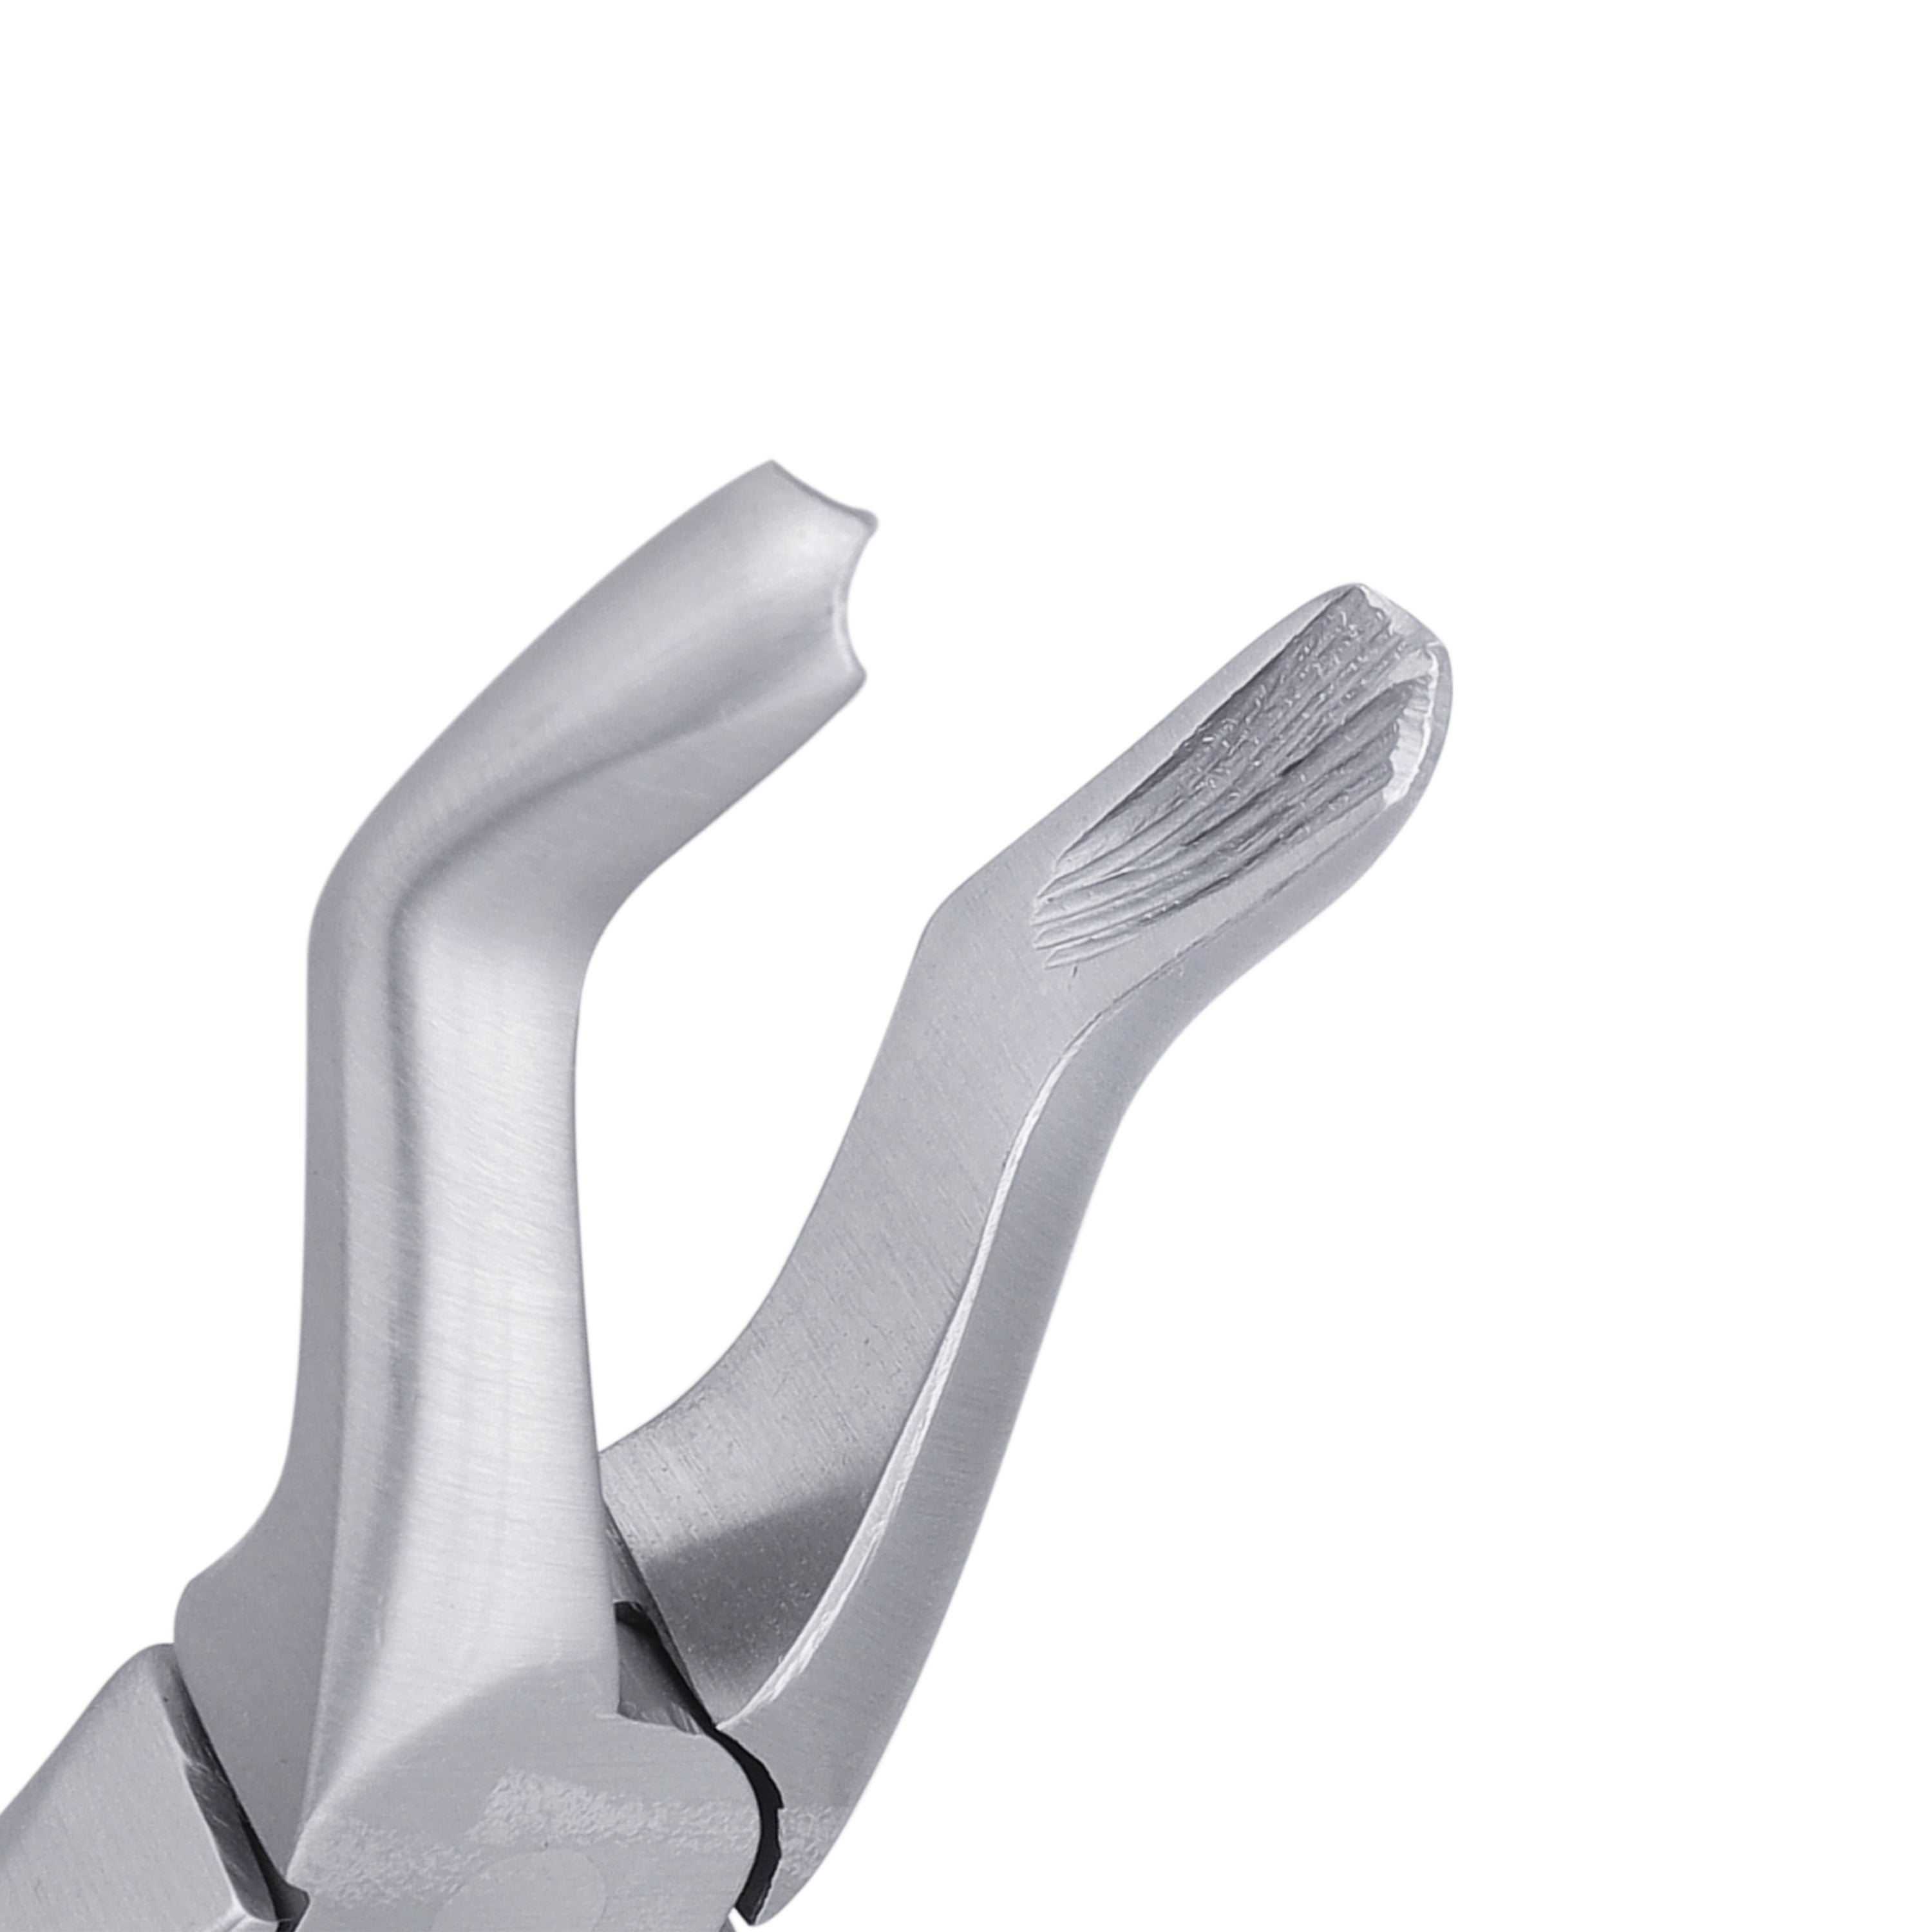 4C Pedo Upper Premolars English Extraction Forcep - HiTeck Medical Instruments